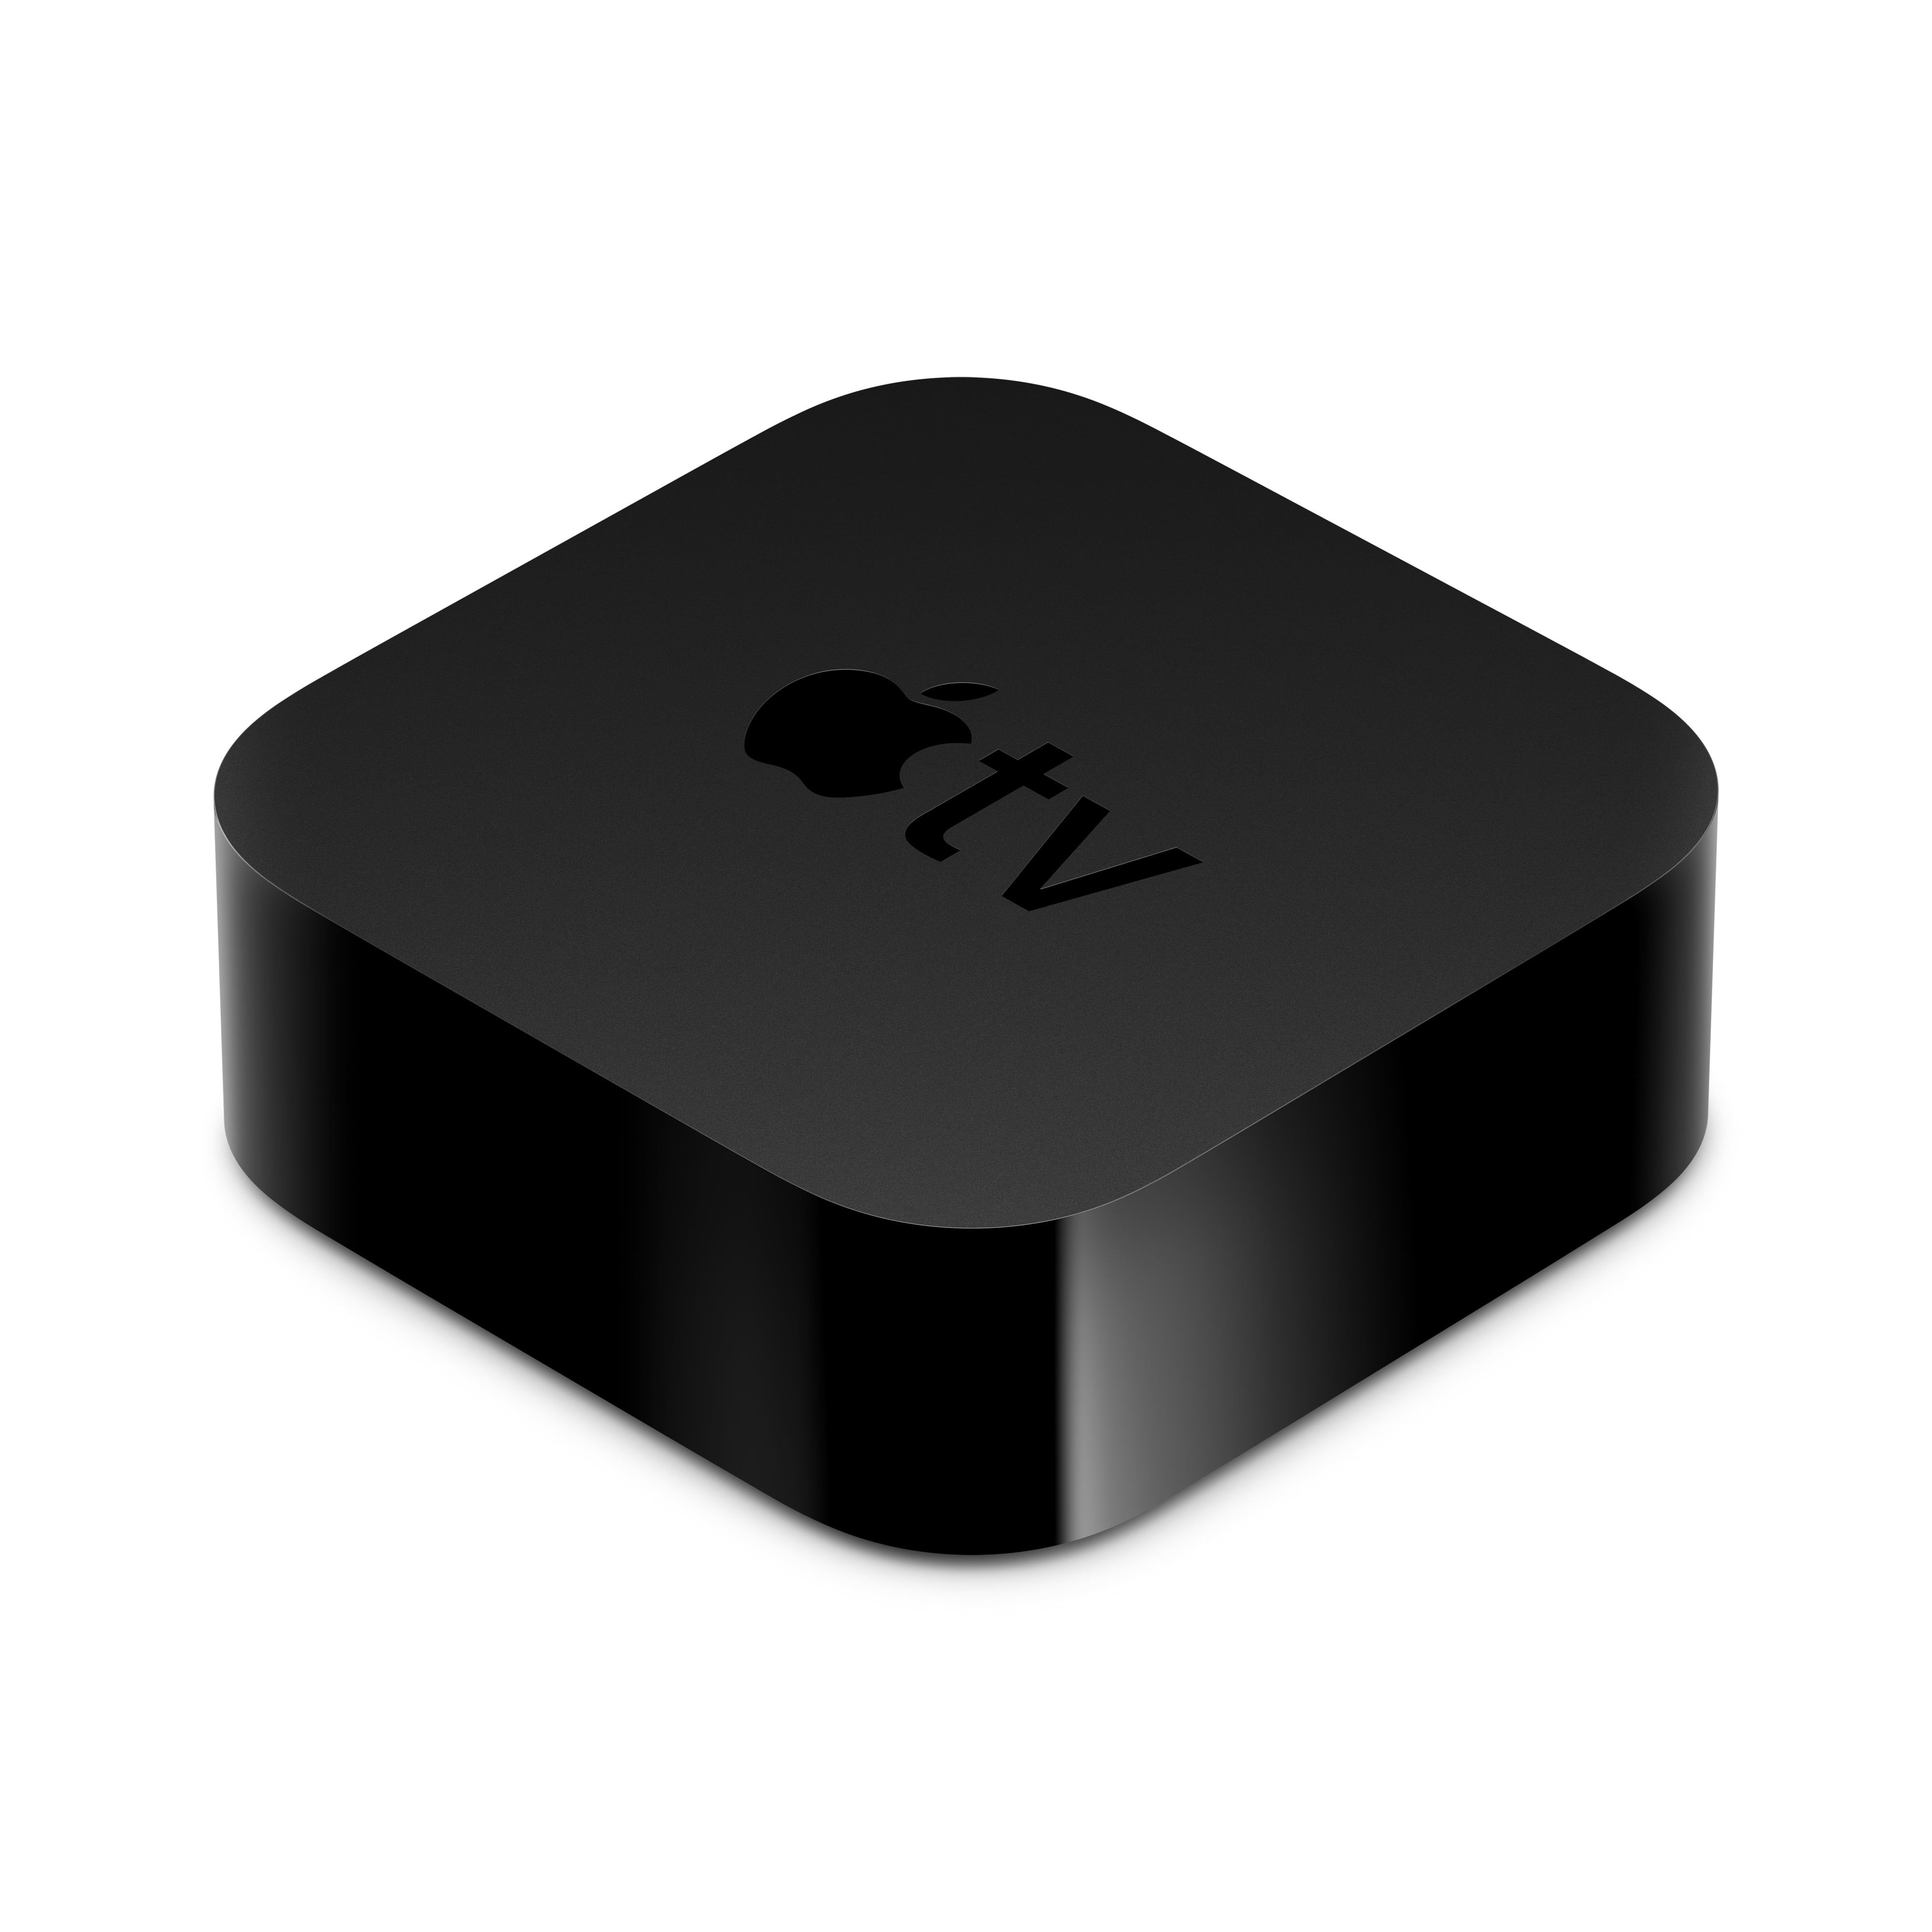 Apple TV 4K 32GB (2nd Generation) (Latest Model)